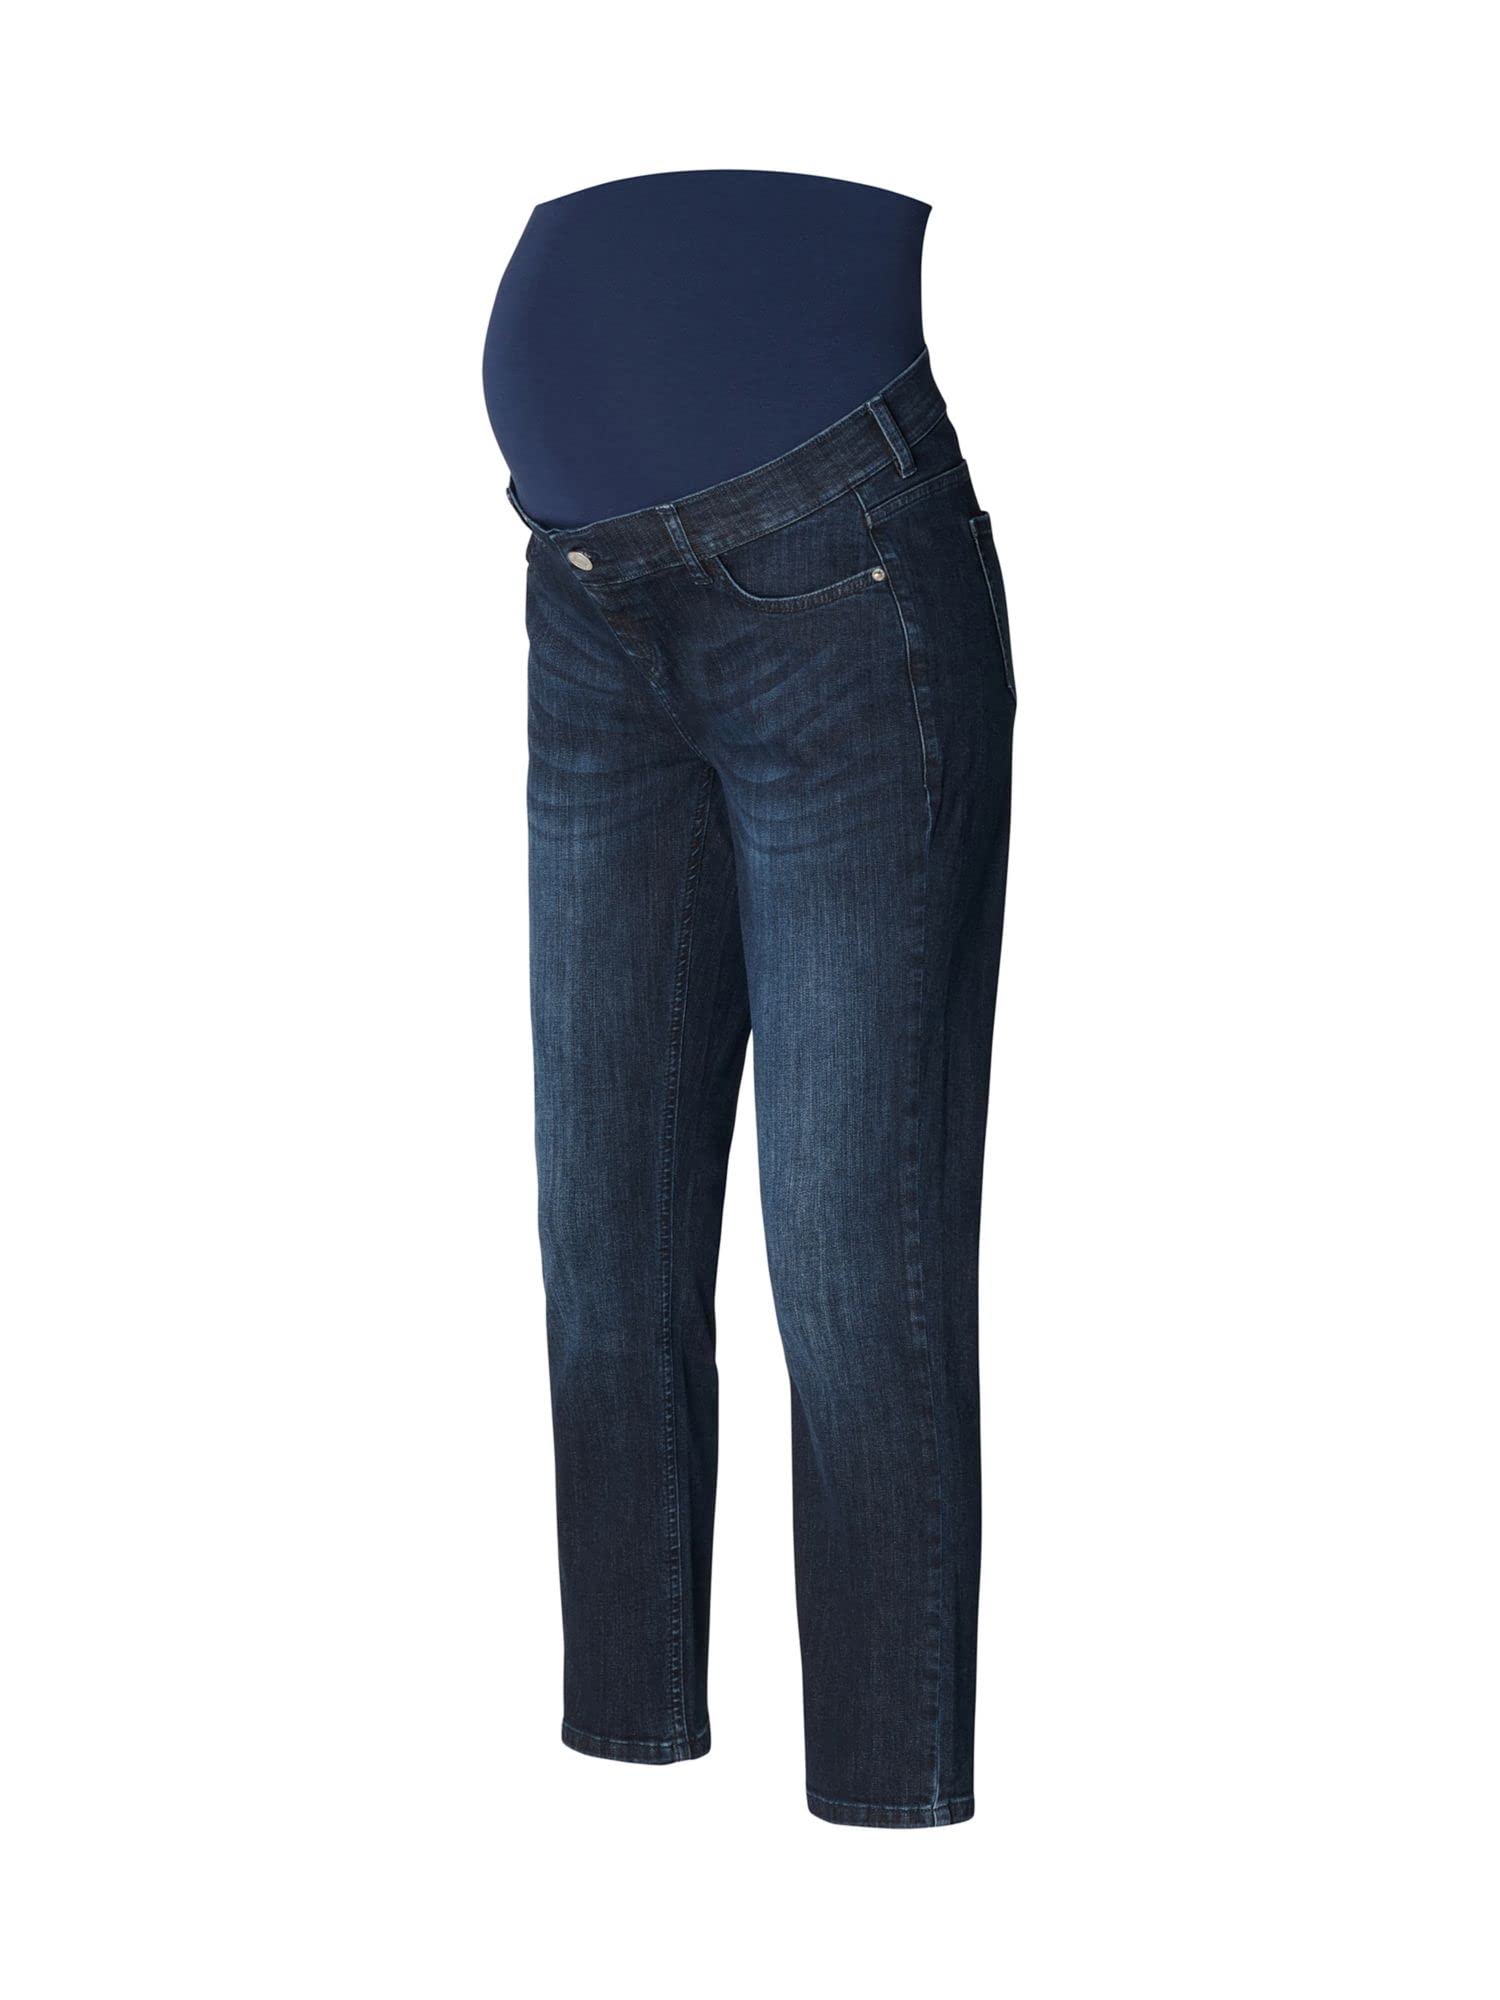 ESPRIT Damen Pants Denim Over The Belly Loose 7/8 Jeans, Darkwash-910, 36